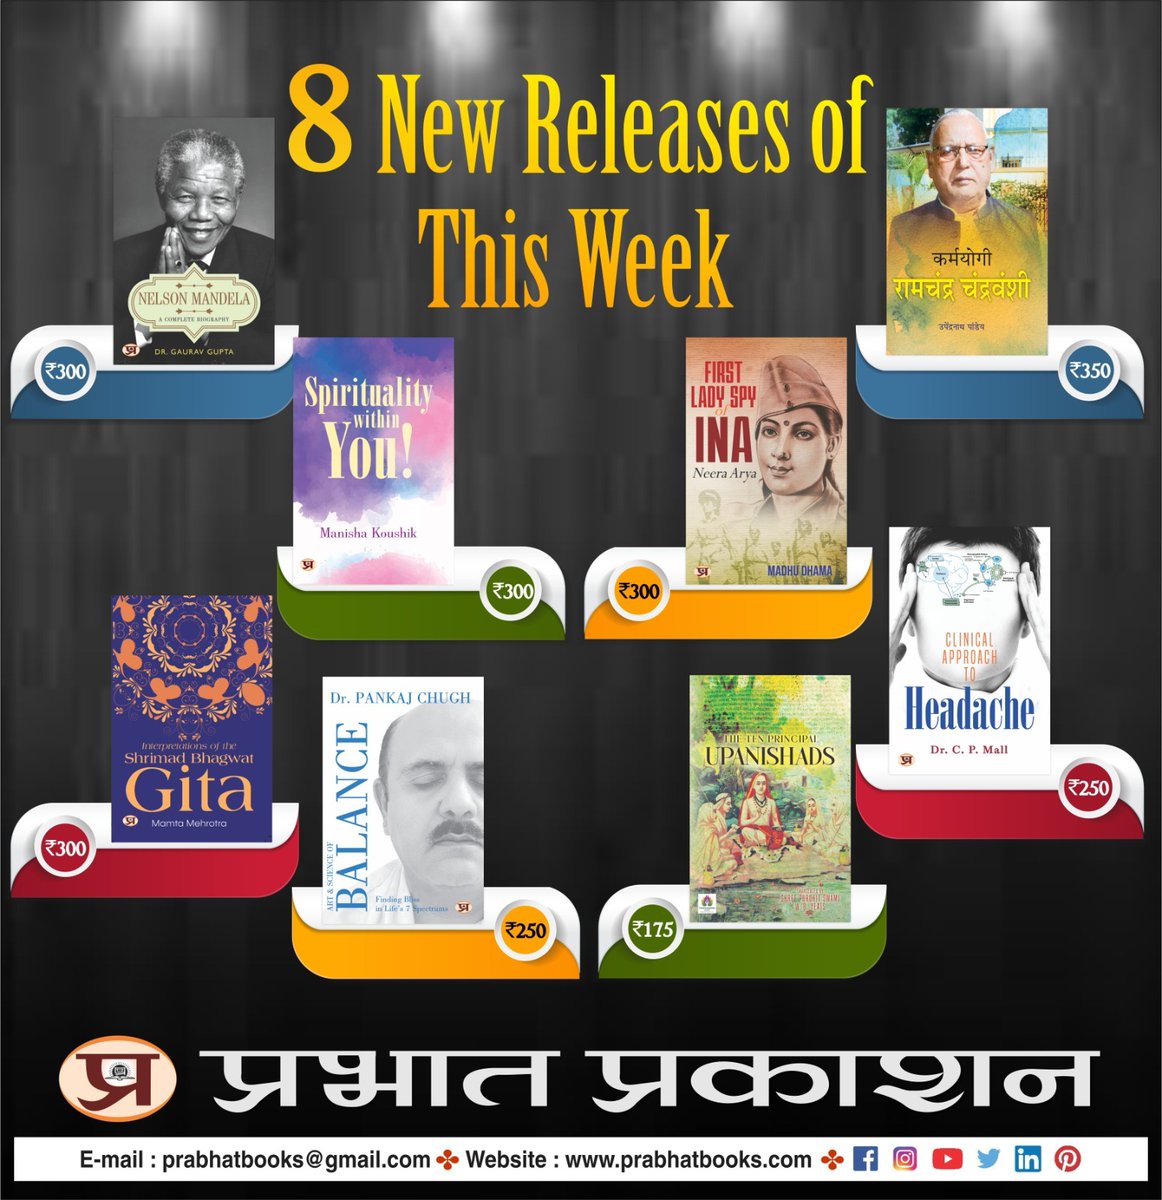 #newbookrelease #newbookalert #weeklybook #englishbook #hindibook #books #booklovers #bookish #BOOKERS #reading #bookworm #bookstagram #bookworms #goodreads